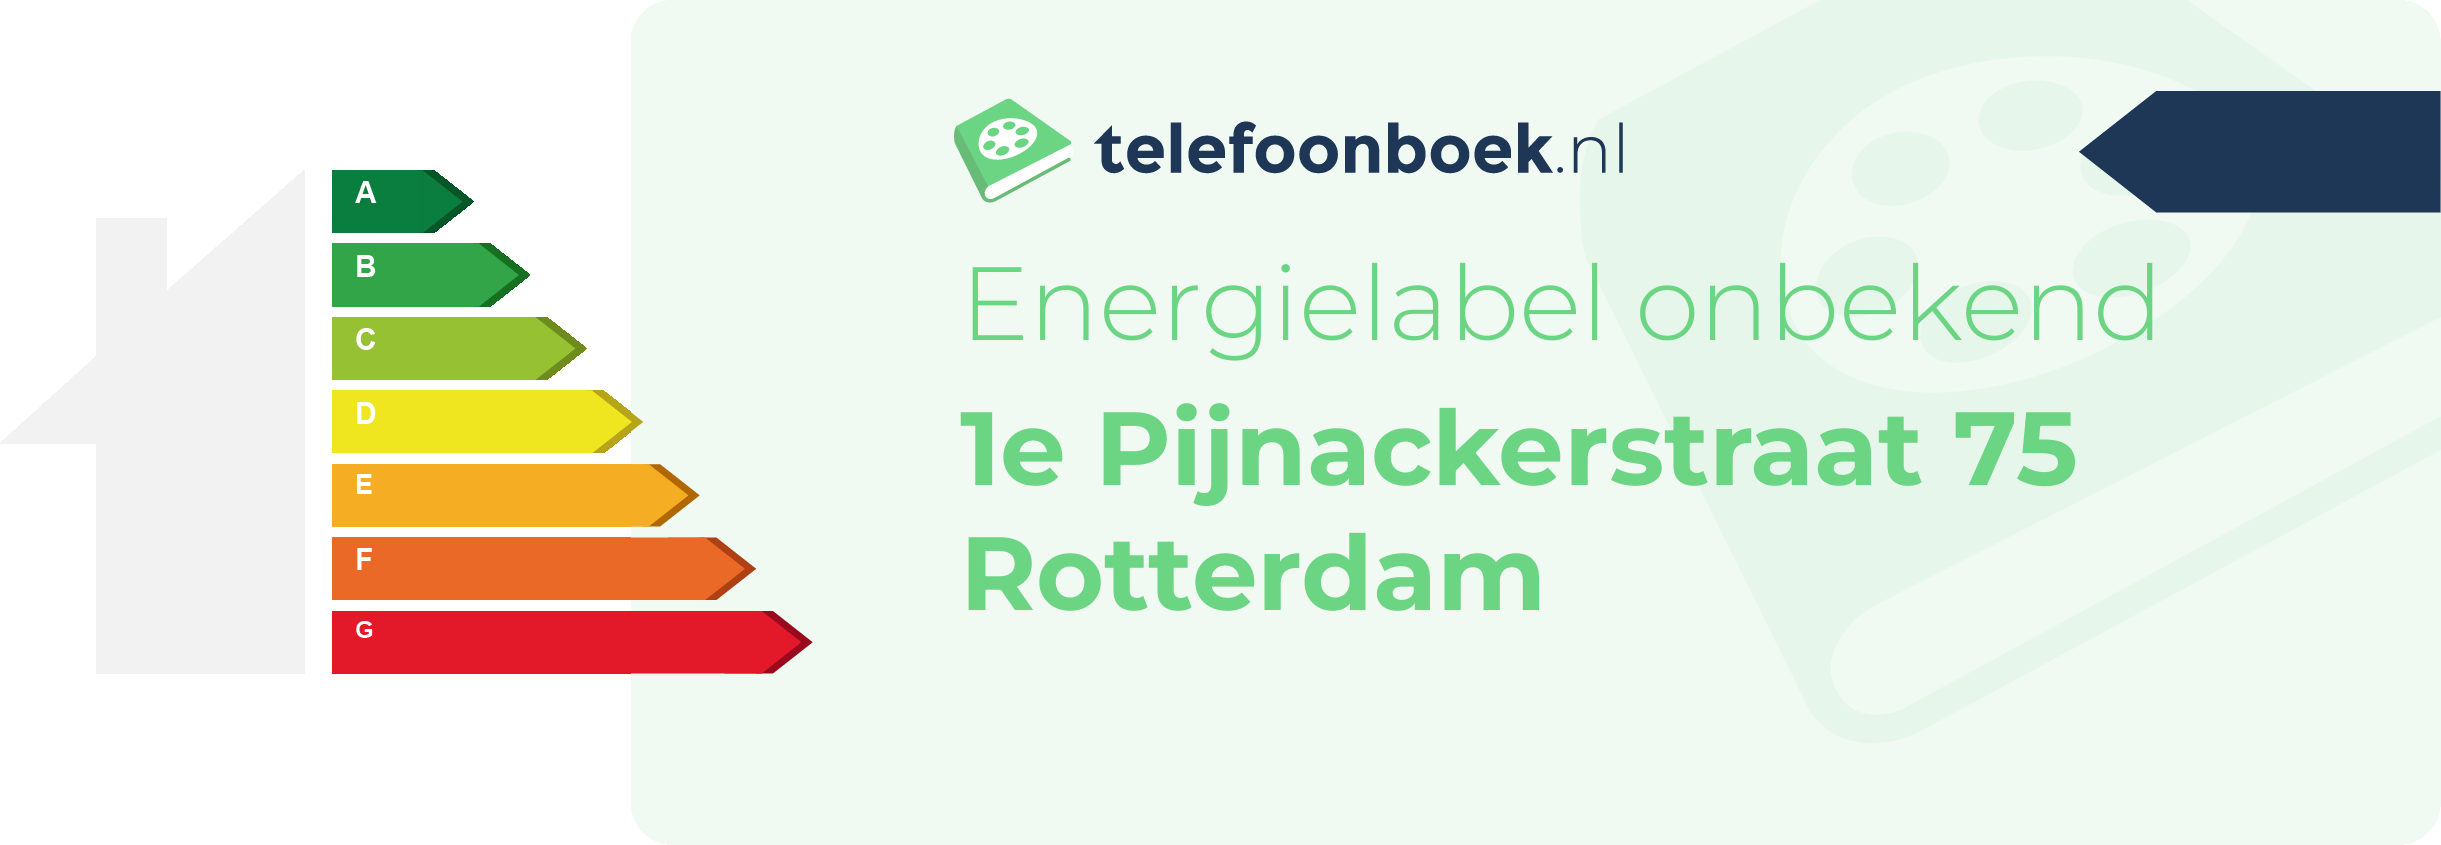 Energielabel 1e Pijnackerstraat 75 Rotterdam